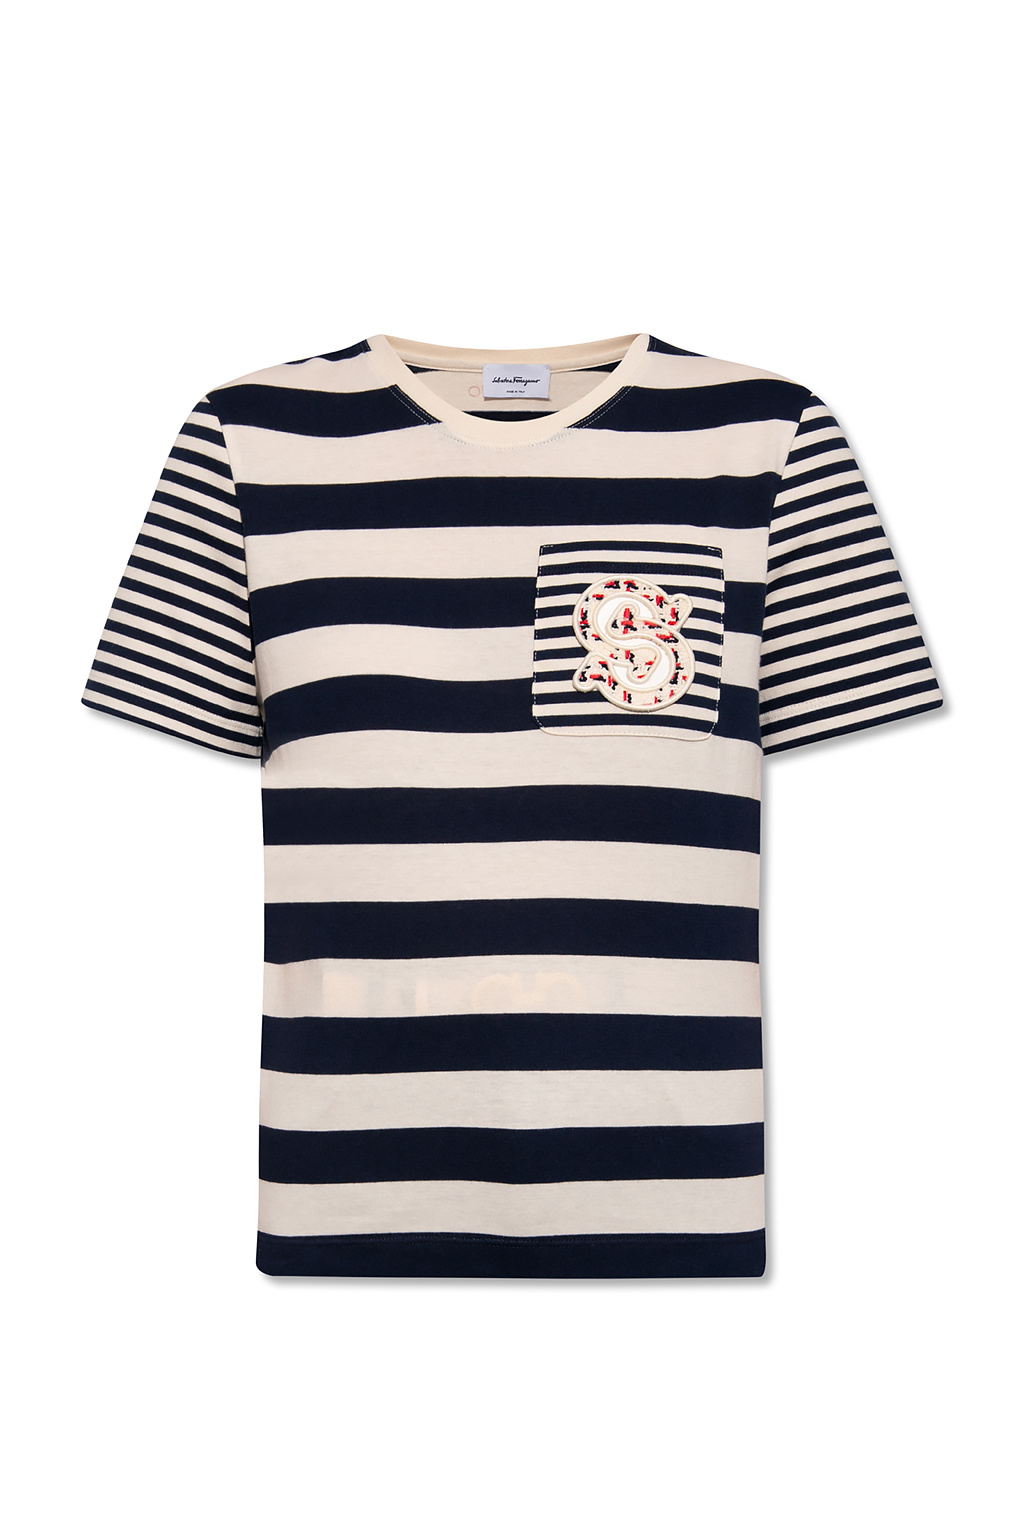 Salvatore Ferragamo Striped T-shirt